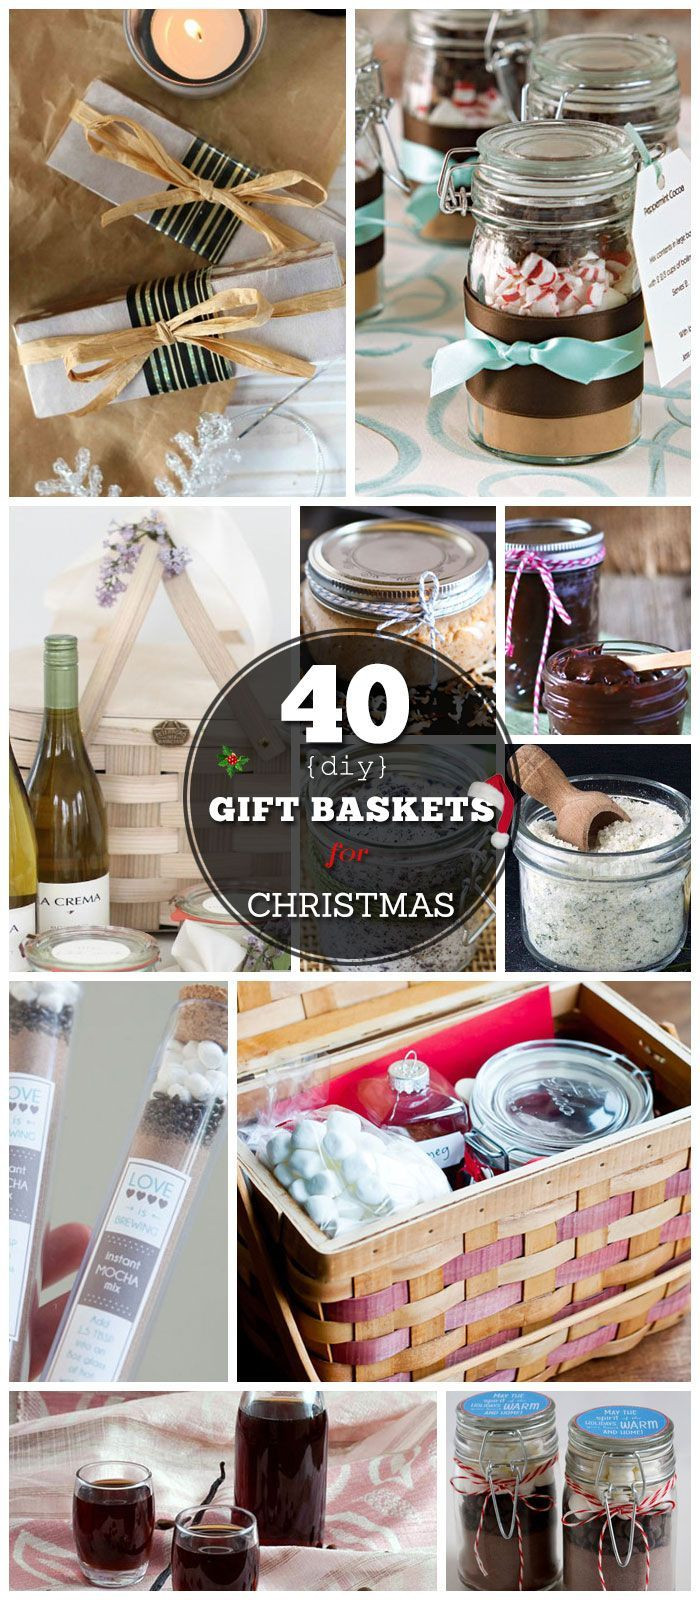 Gift Basket Ideas For Christmas
 40 DIY Gift Basket Ideas for Christmas